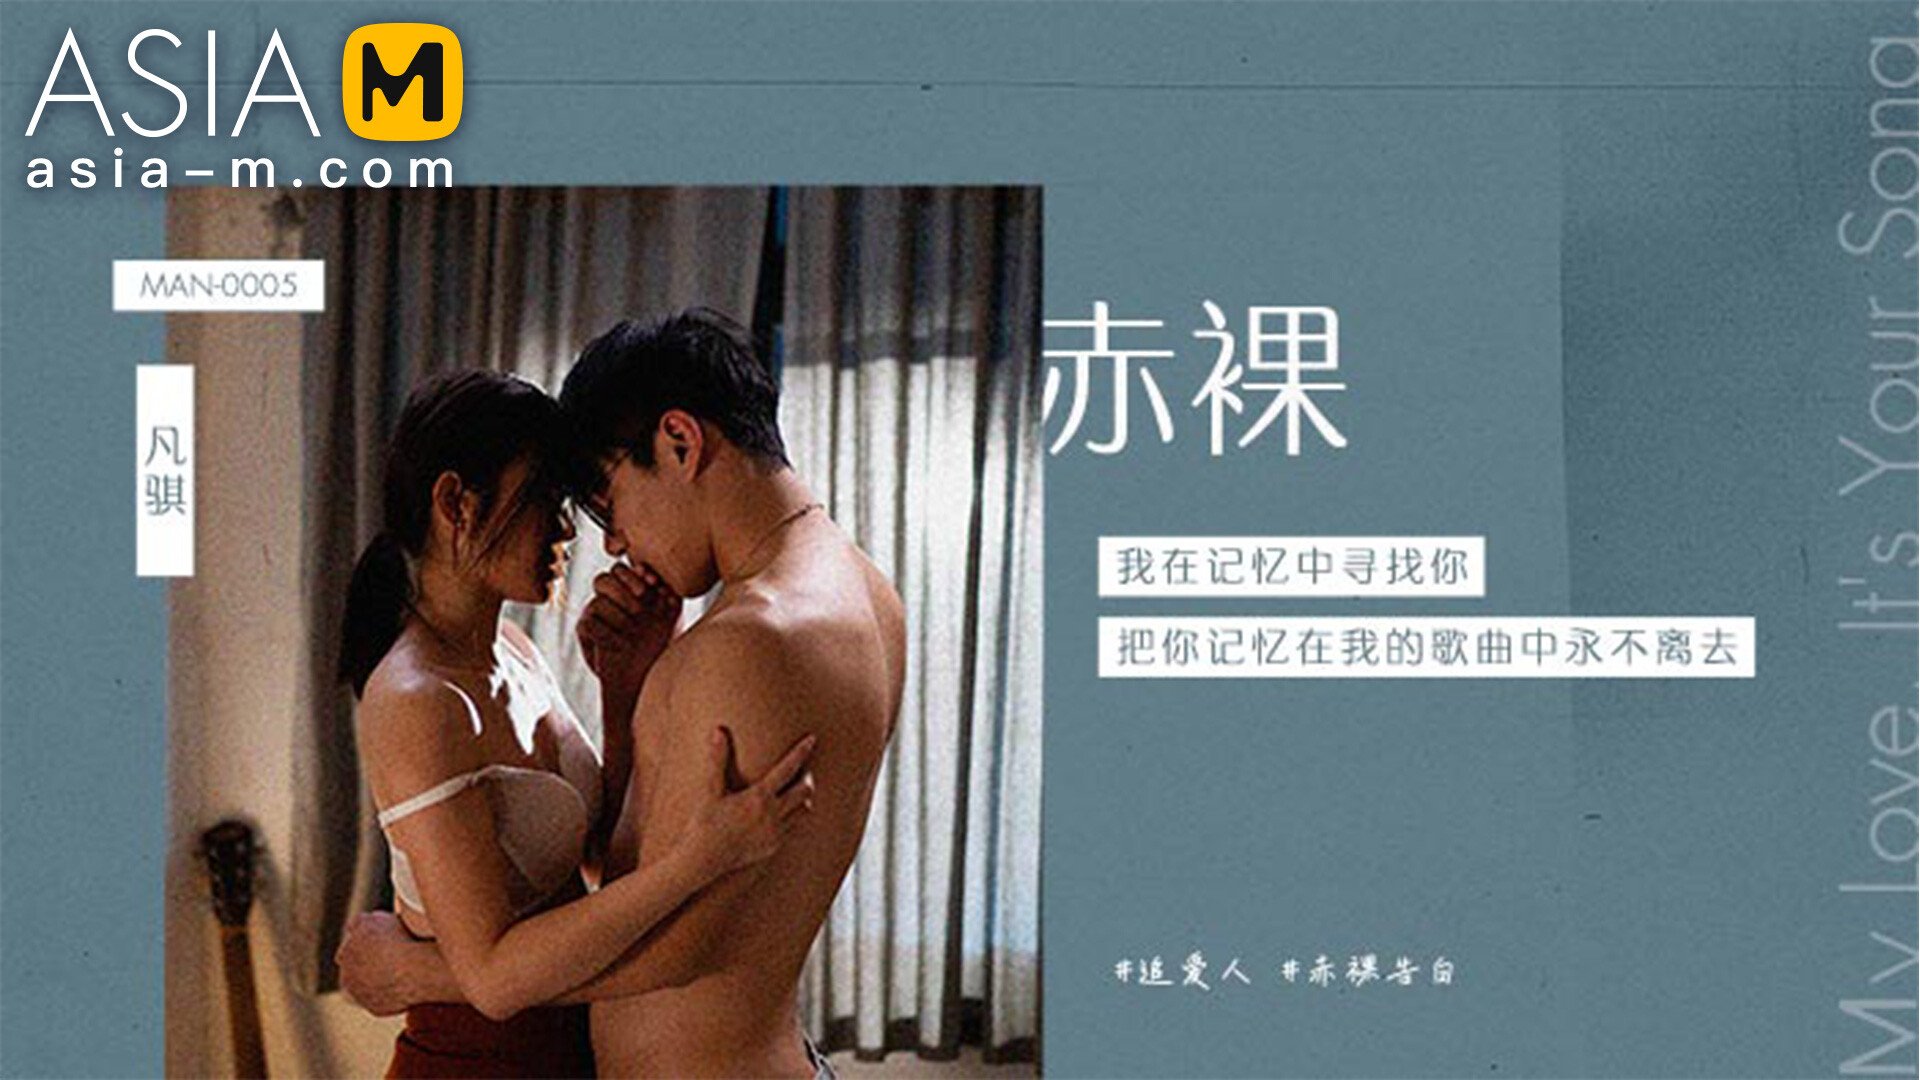 Asia M Liang Yun Fei Naked Man